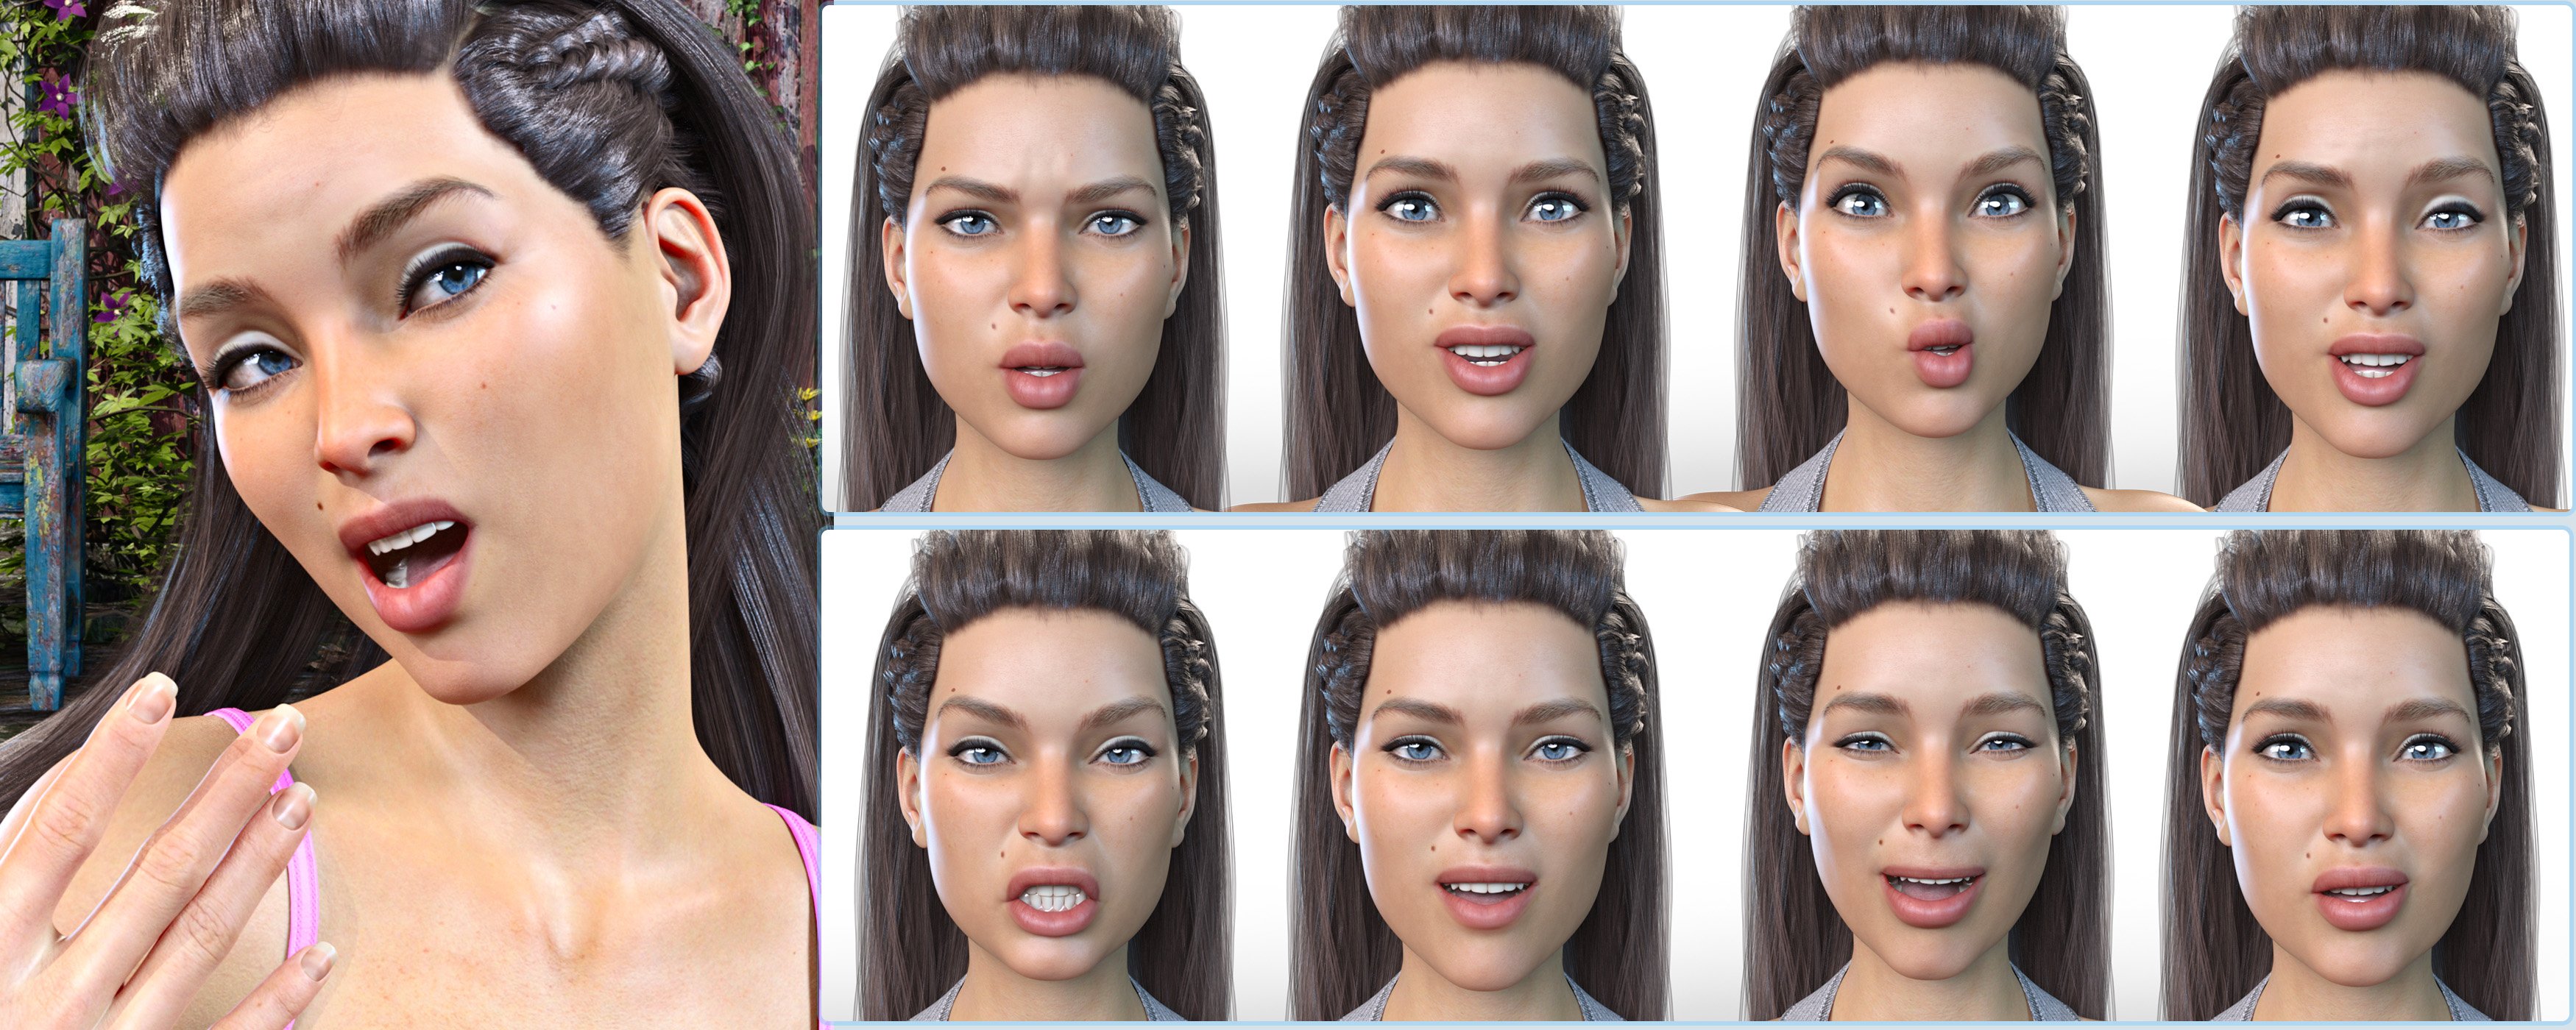 Z Conversation Mix and Match Expressions for Genesis 8.1 by: Zeddicuss, 3D Models by Daz 3D